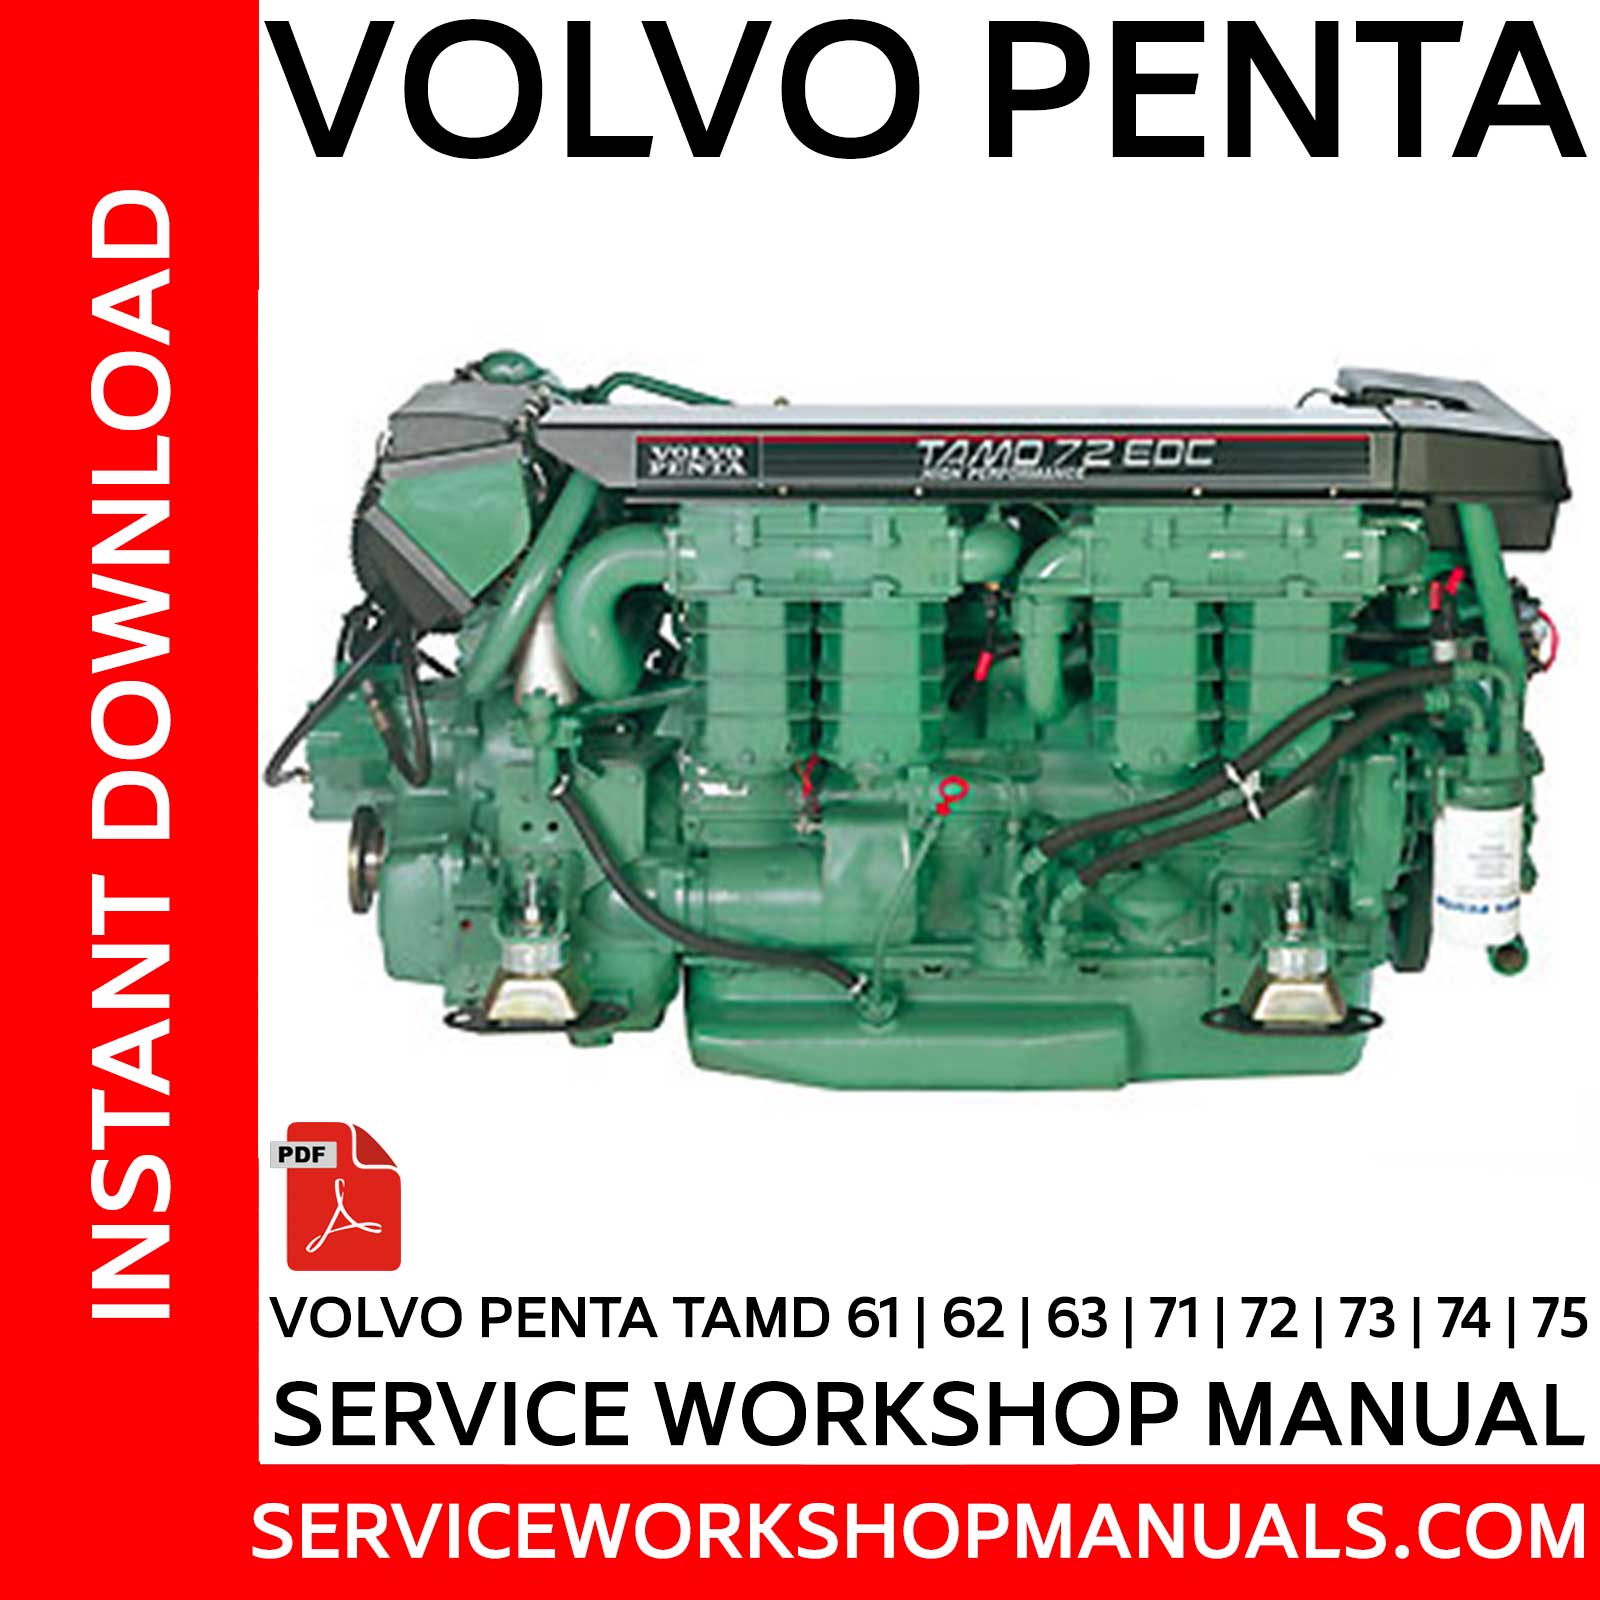 Volvo Penta TAMD 61, 62, 63, 71, 72 Service Manual Service